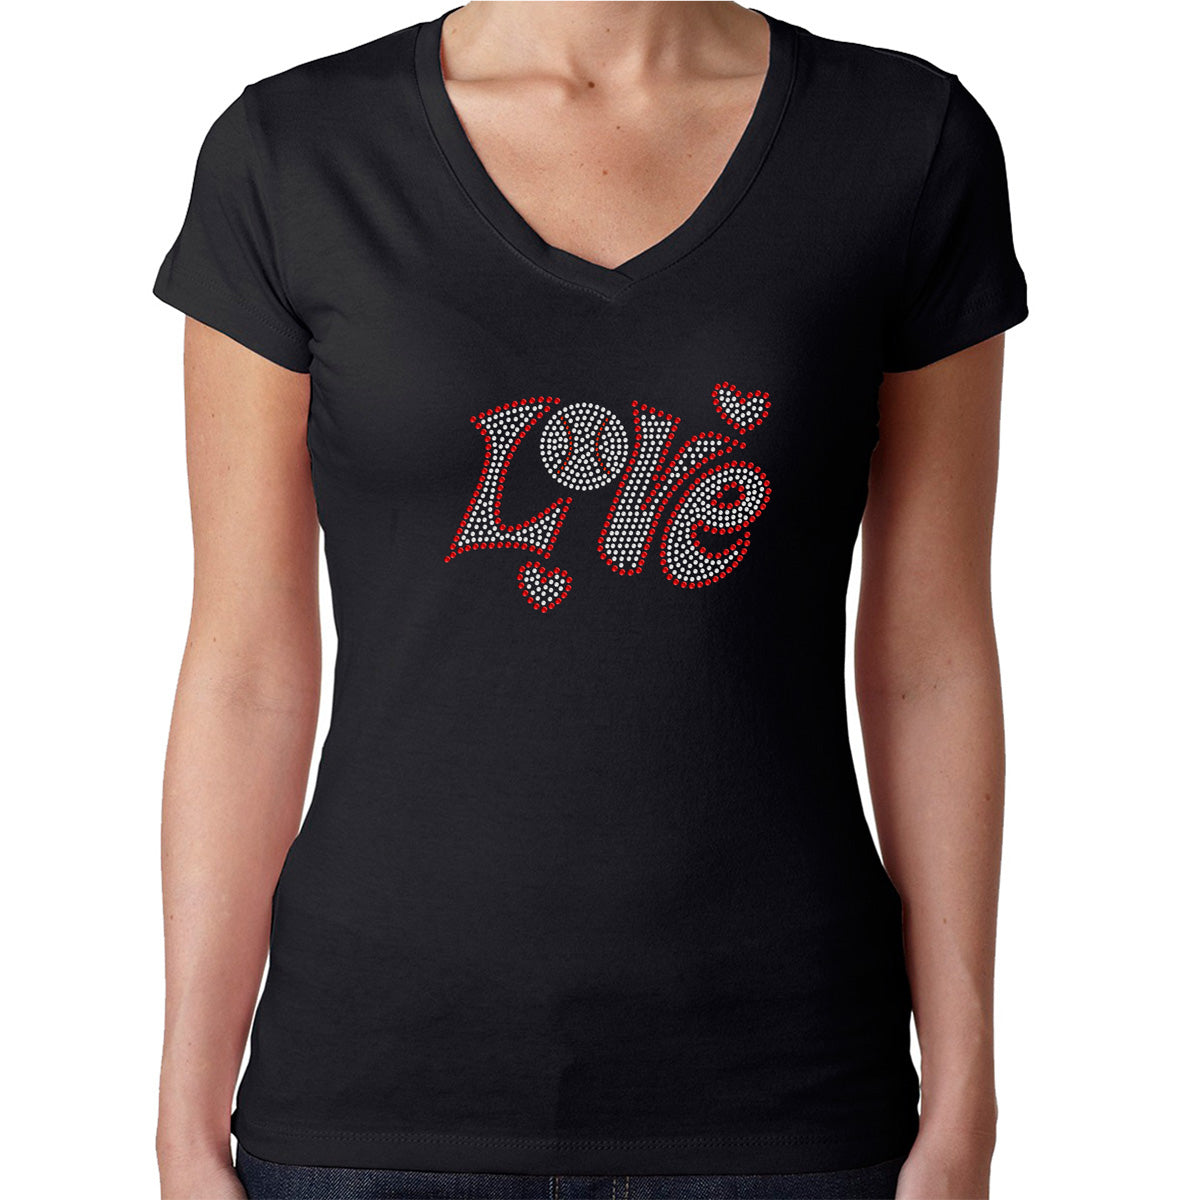 Womens T-Shirt Rhinestone Bling Black Fitted Tee Love Baseball Ball Sparkle